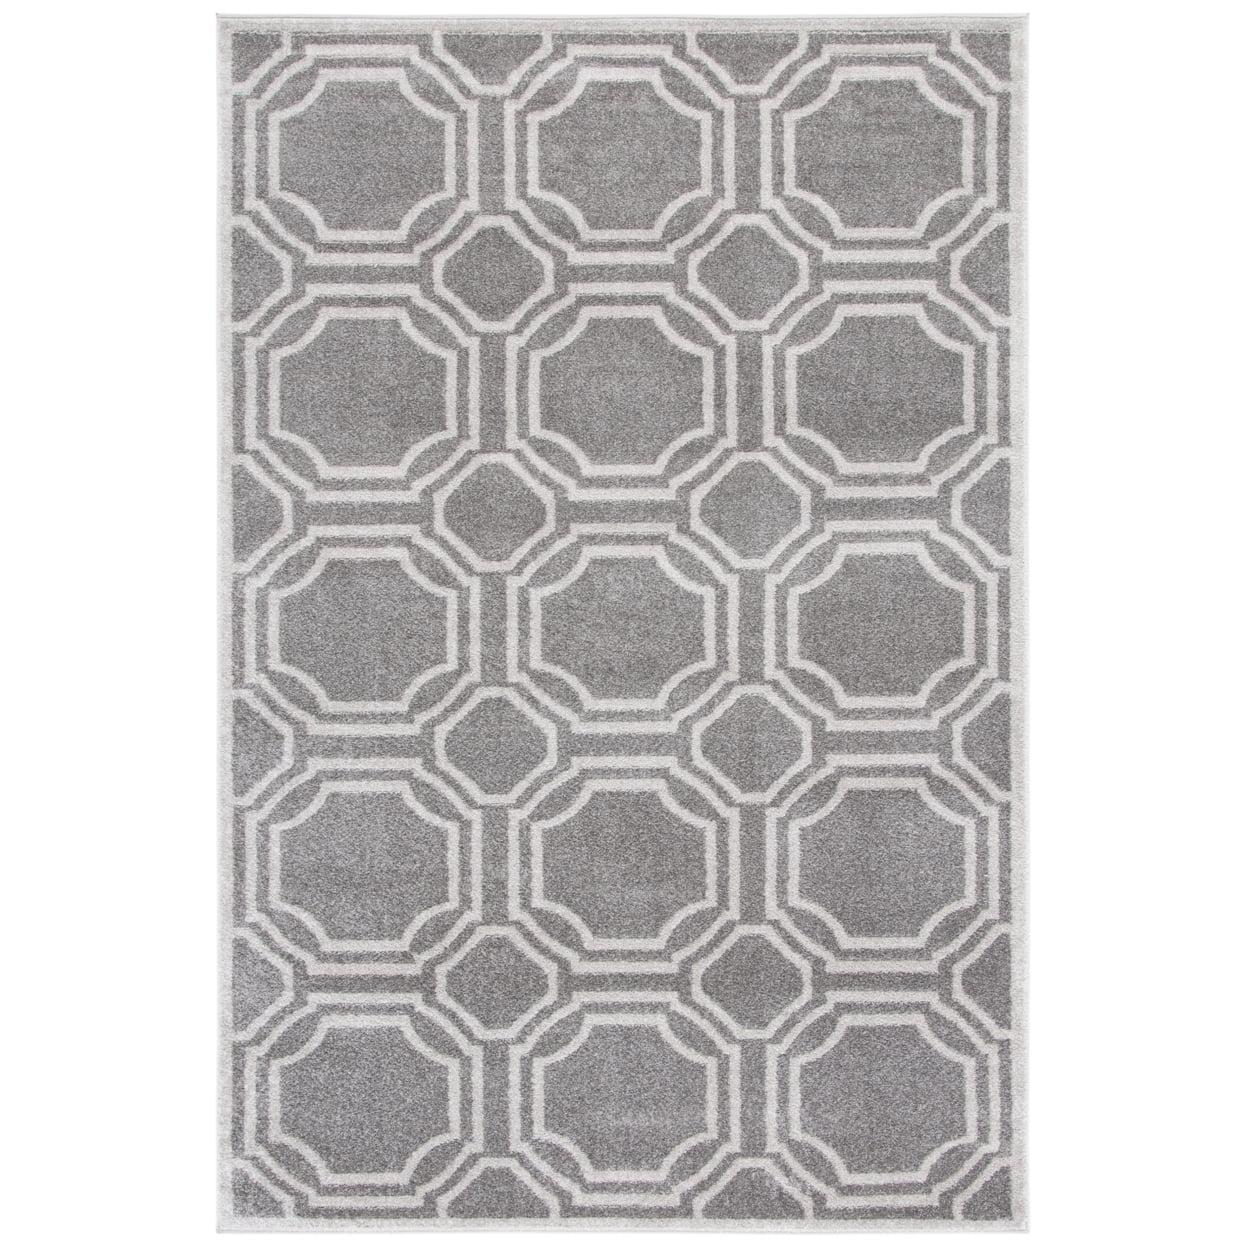 Geometric Harmony 6' x 9' Grey and Light Grey Synthetic Area Rug